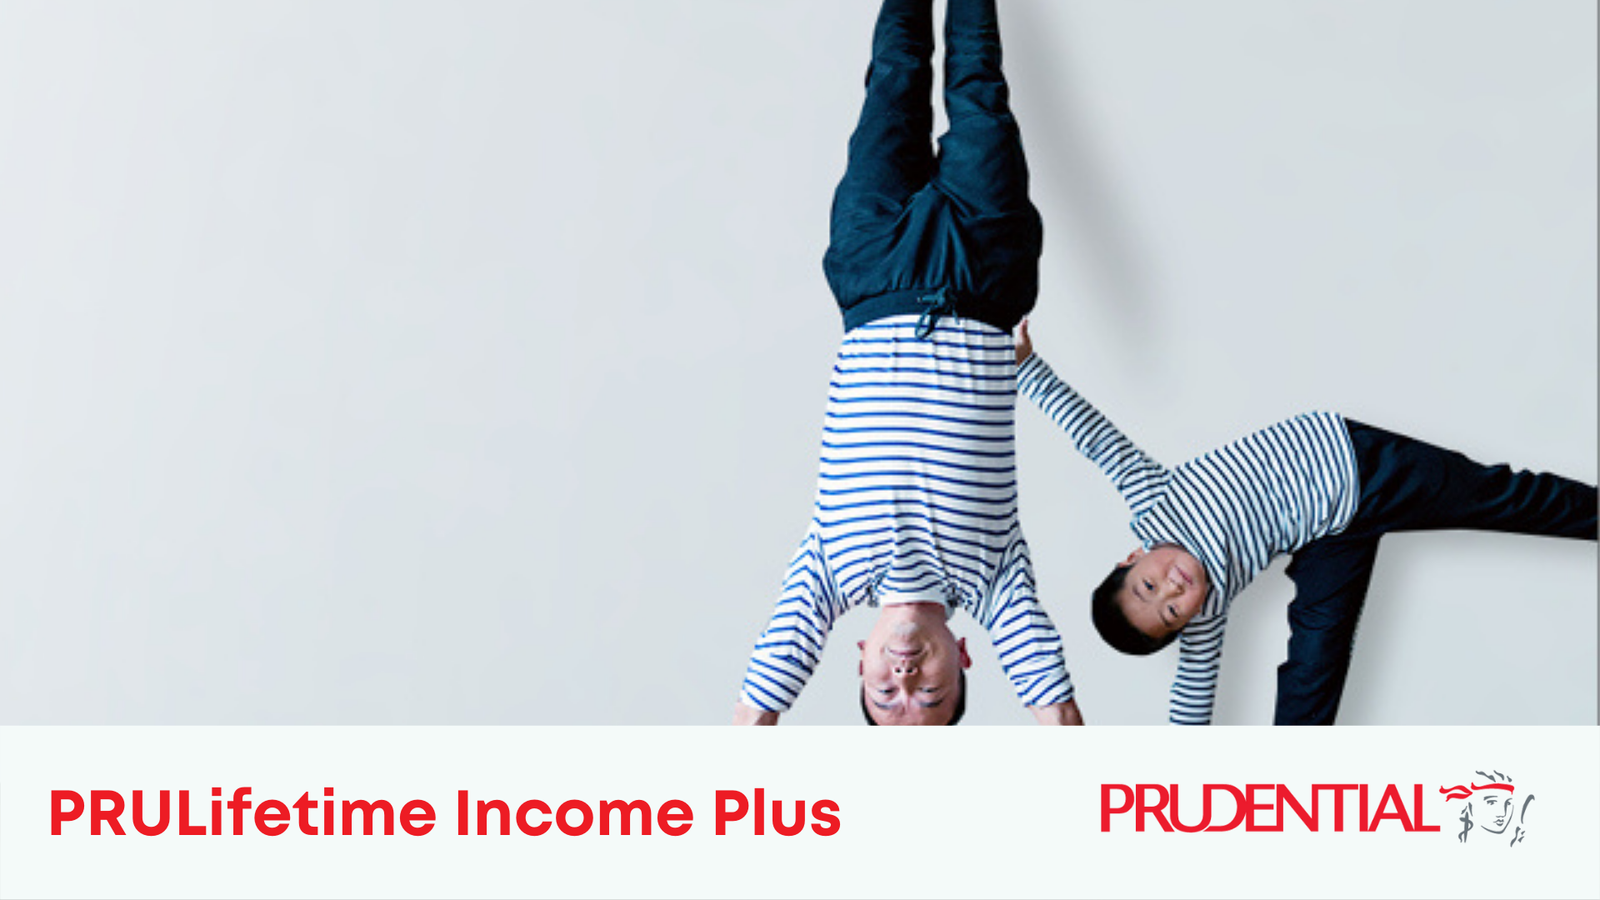 Prudential PRULifetime Income Plus